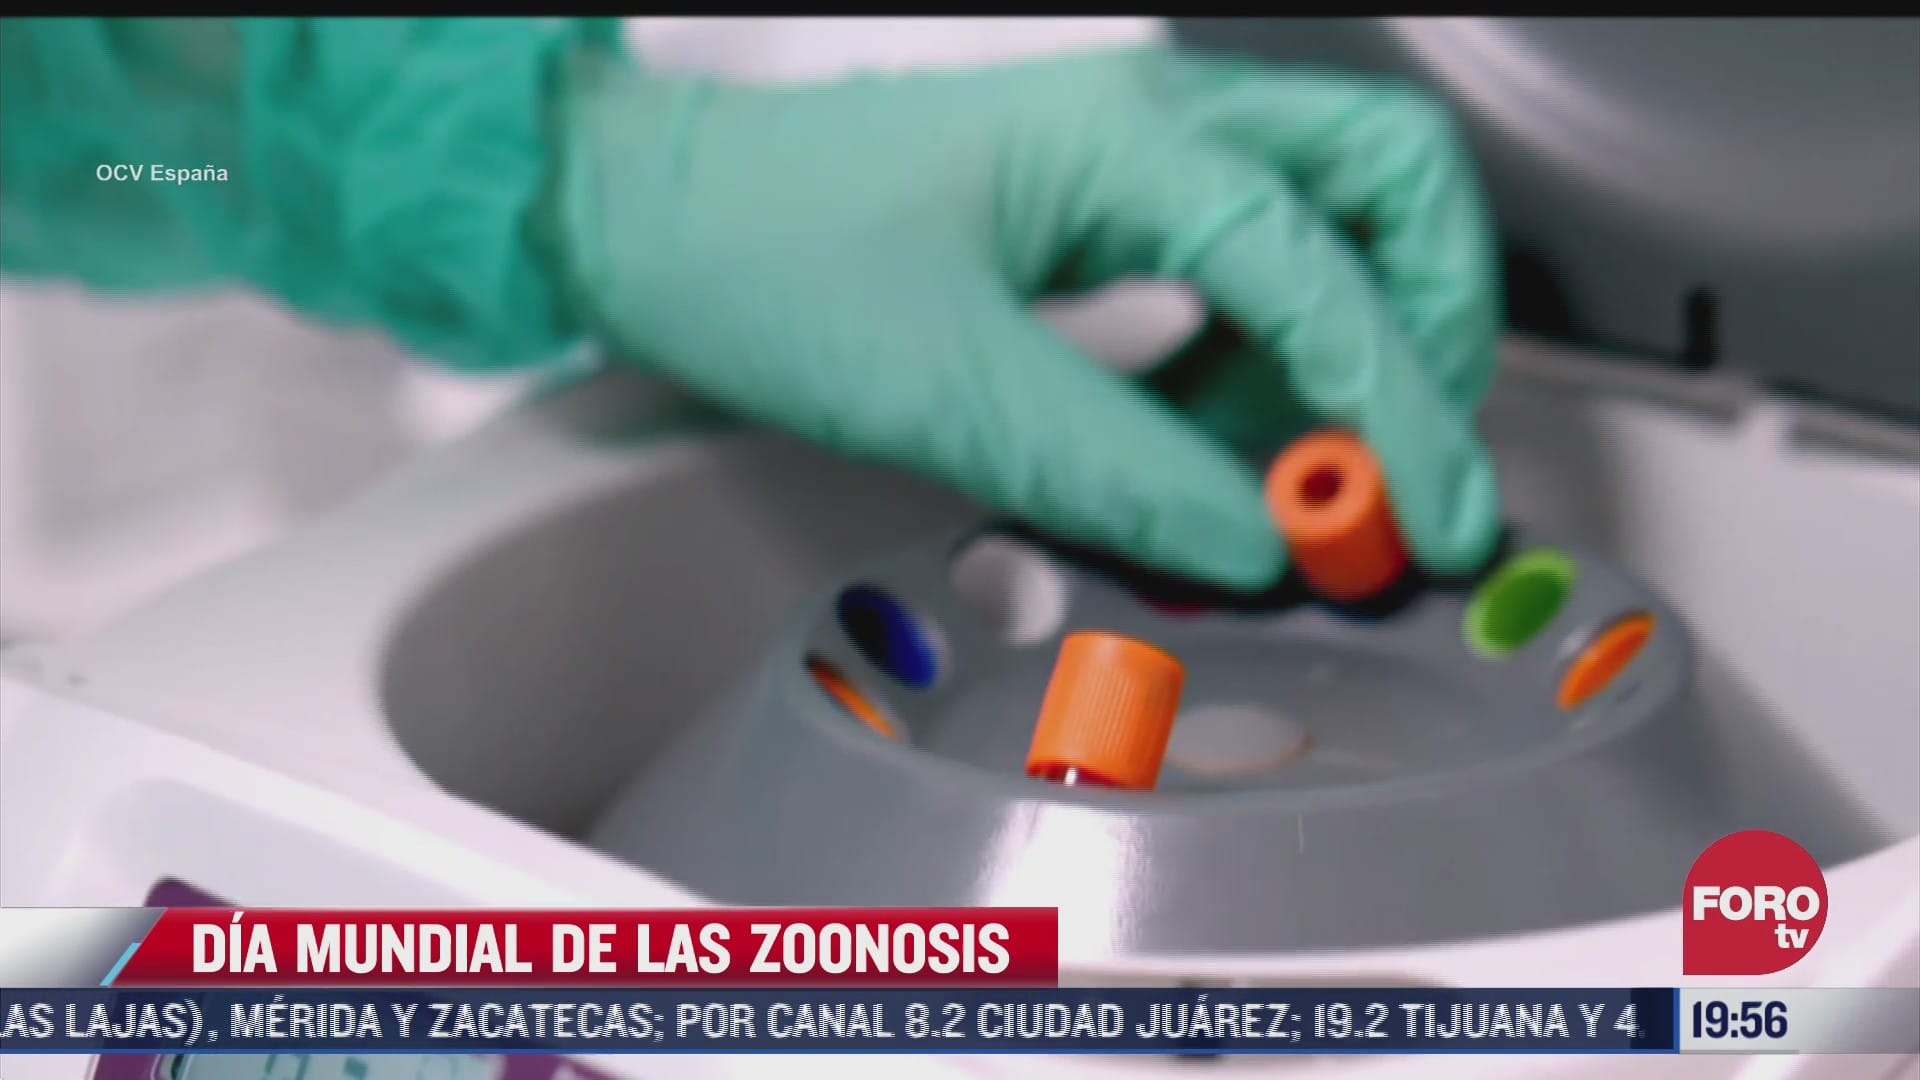 este 6 de julio se celebra el dia mundial de la zoonosis